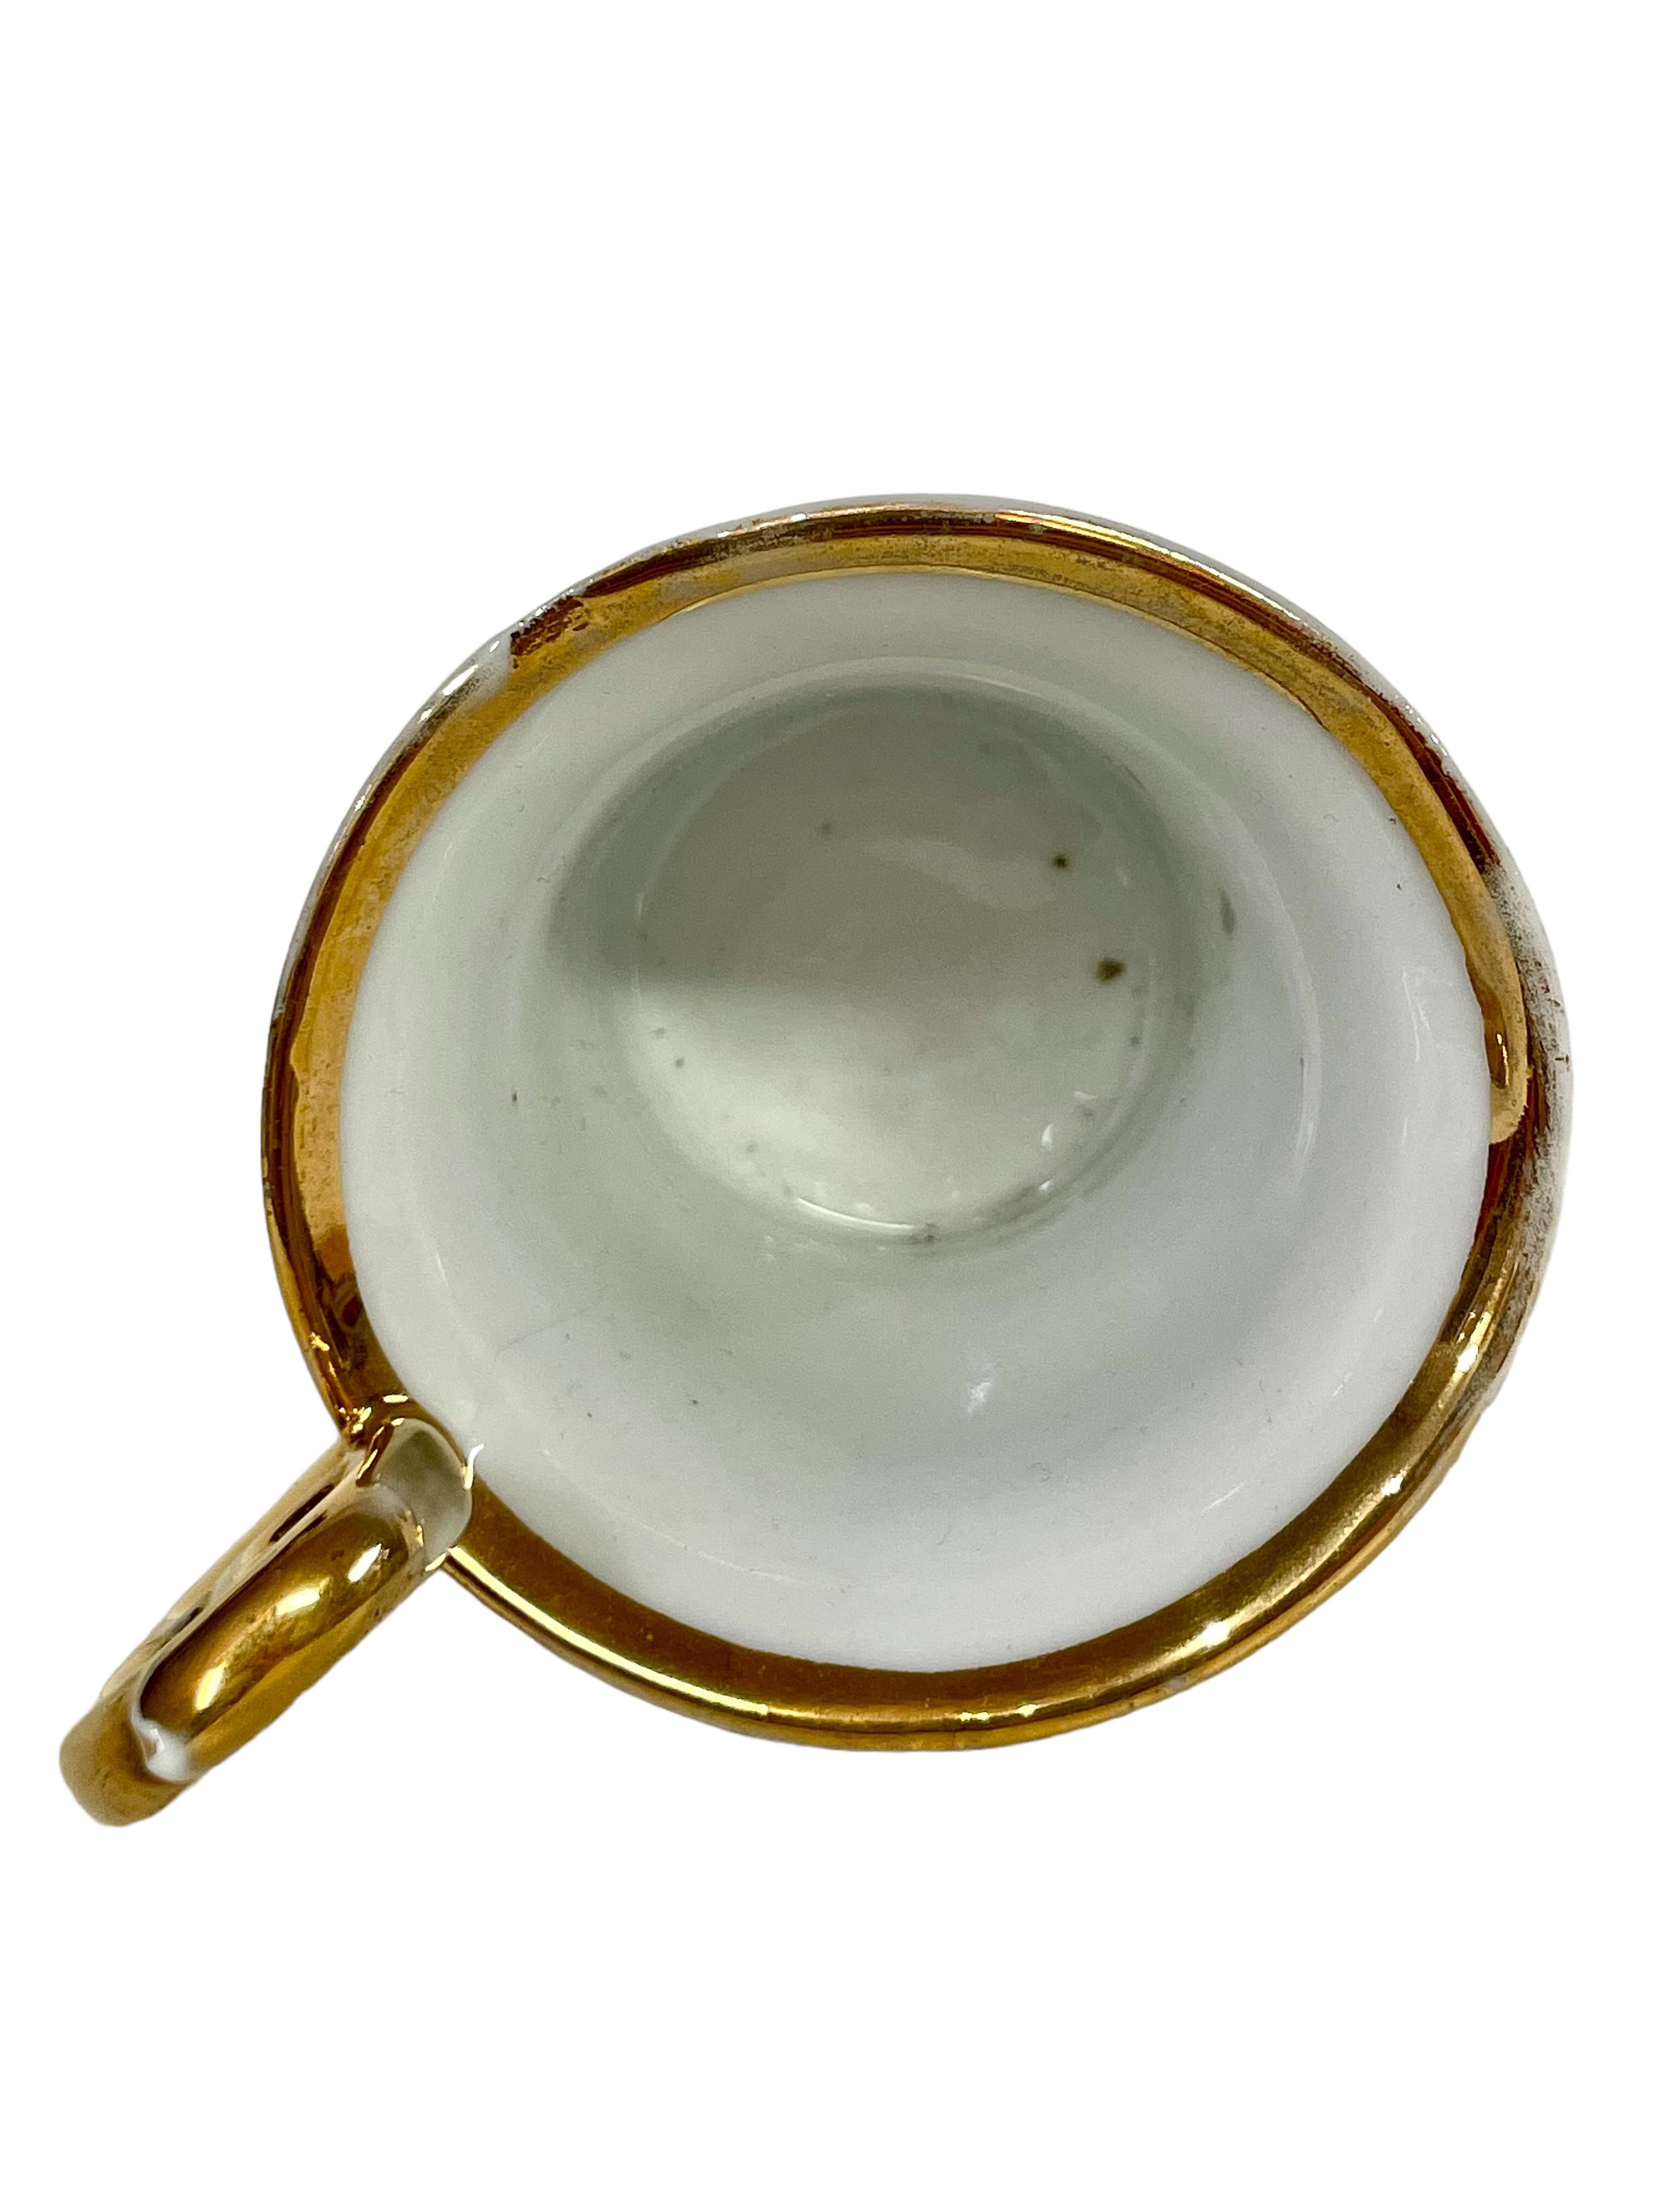 19th Century Paris Porcelain Teacup and Saucer Depicting Empress Josephine For Sale